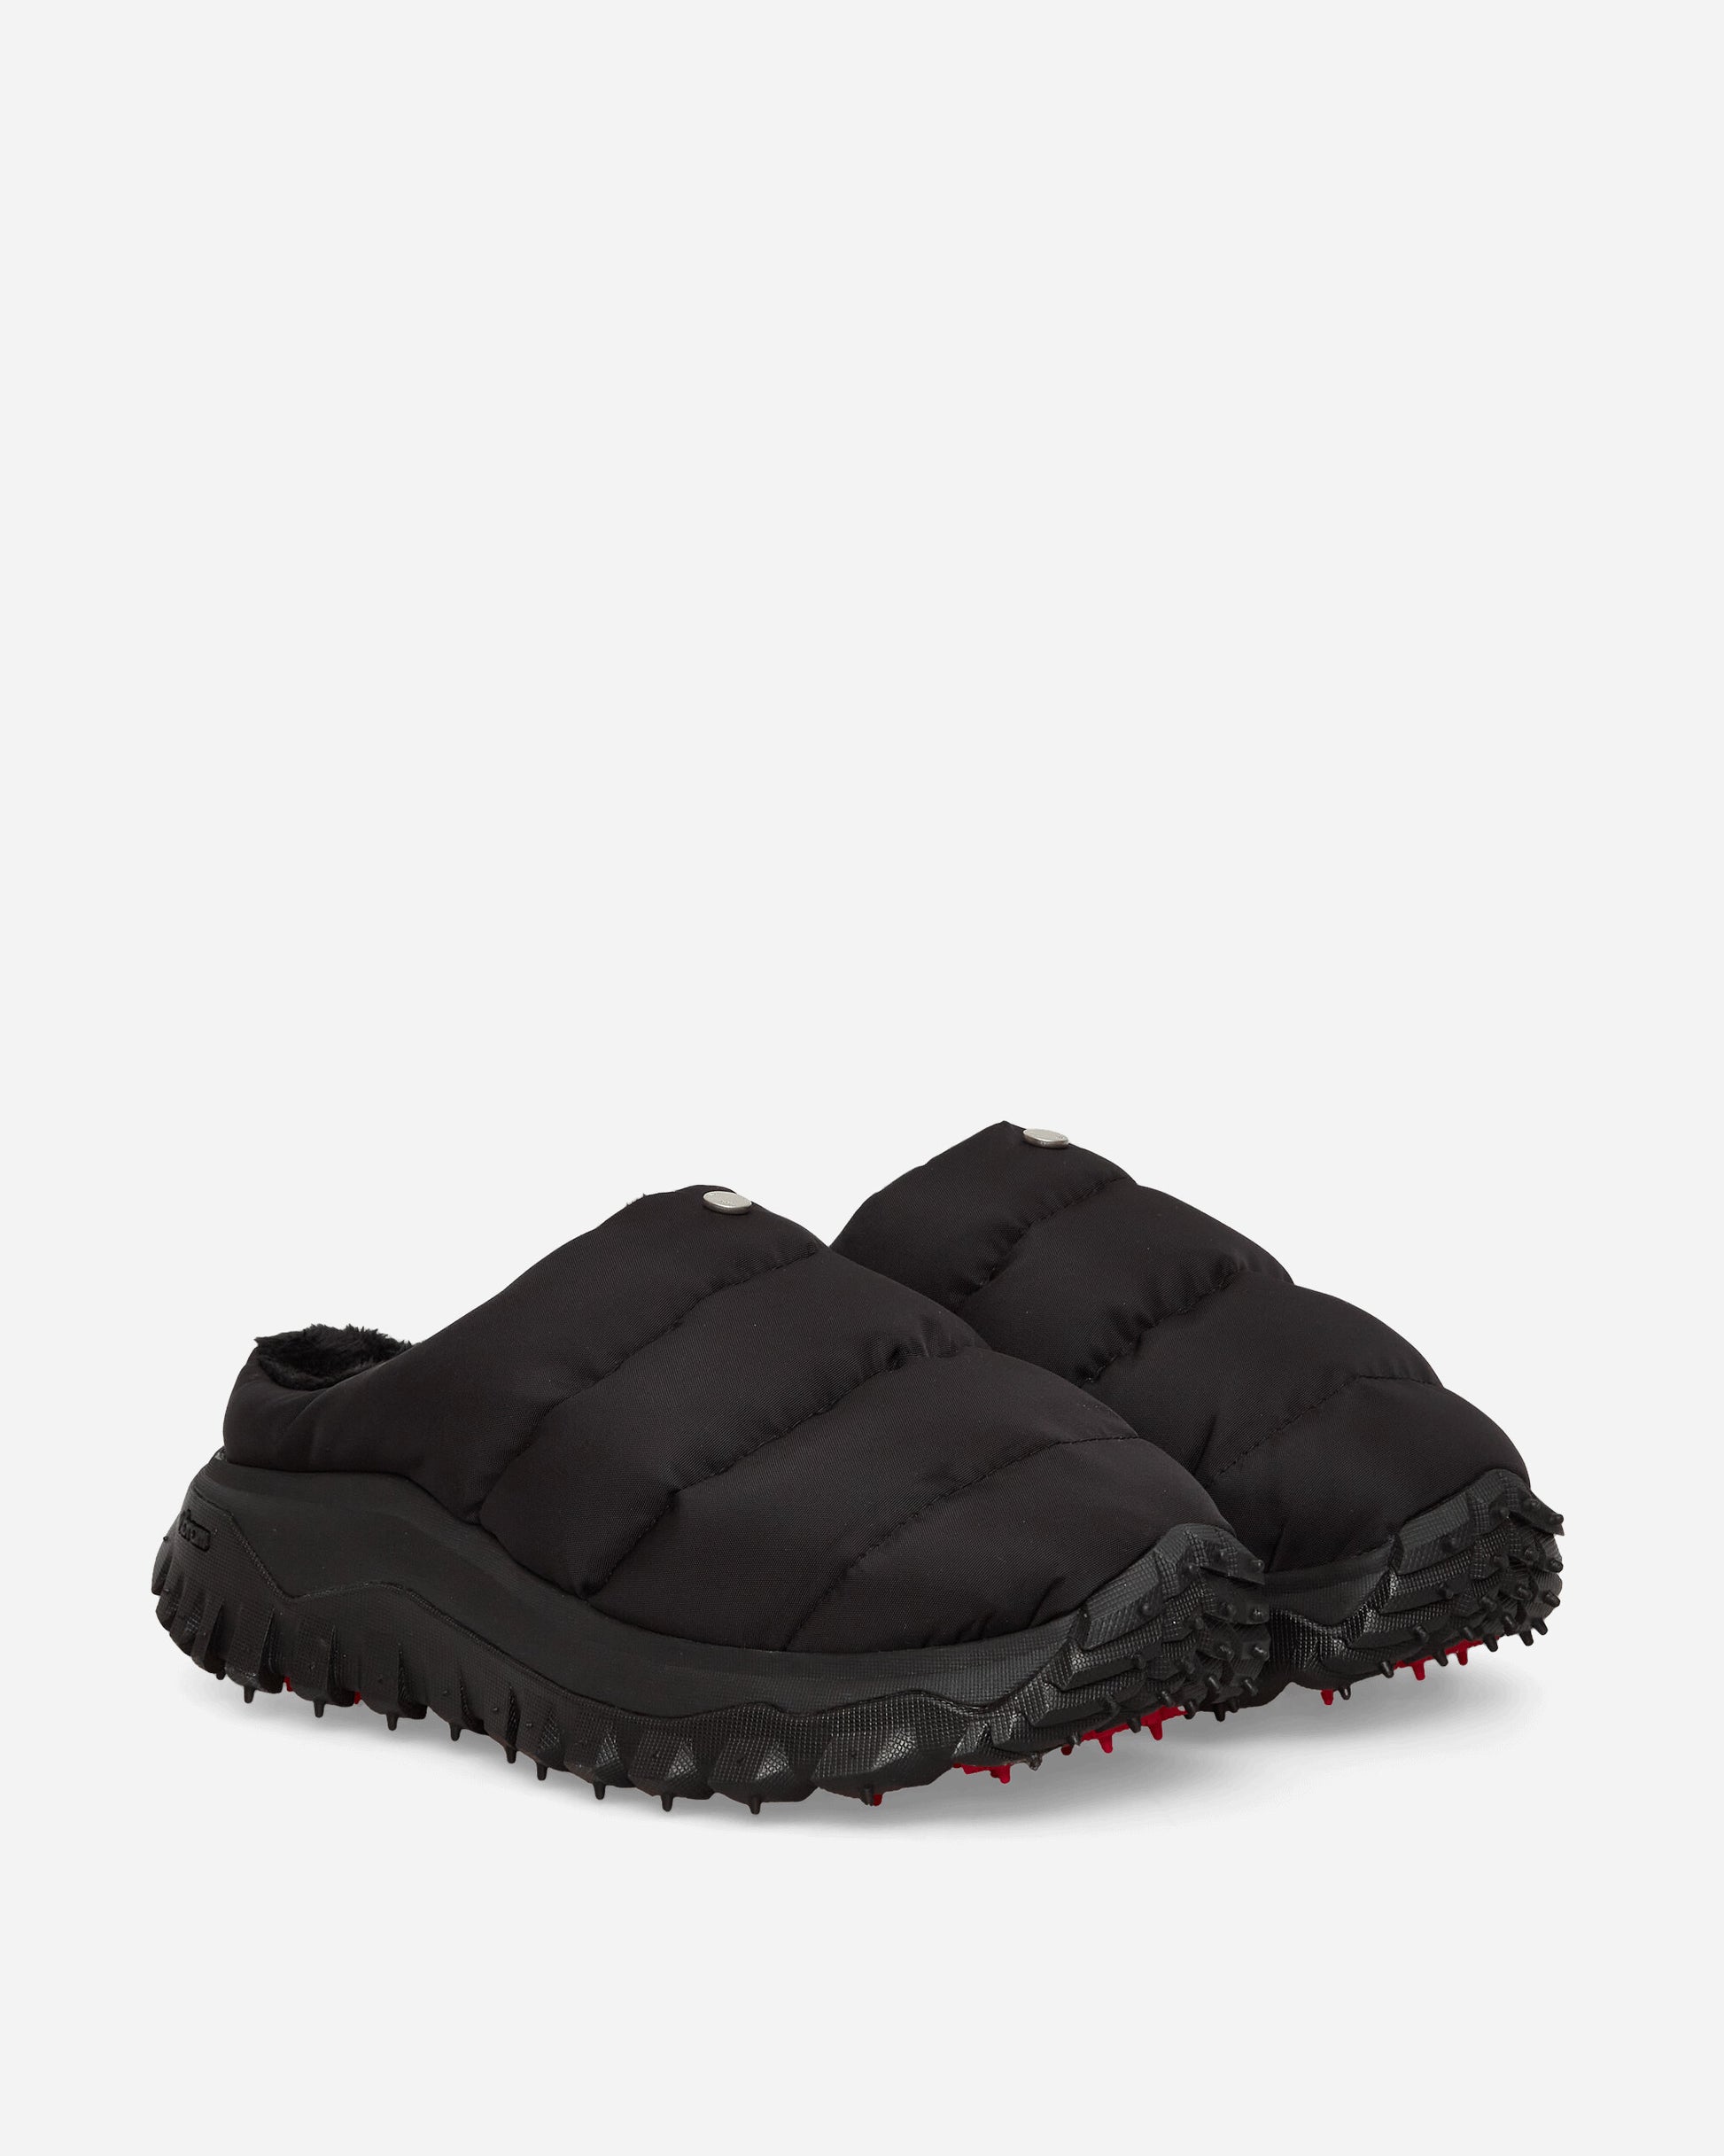 Moncler Genius Puffer Trail Slides Shoes Black Sandals and Slides Slides 4C00010M2490 999